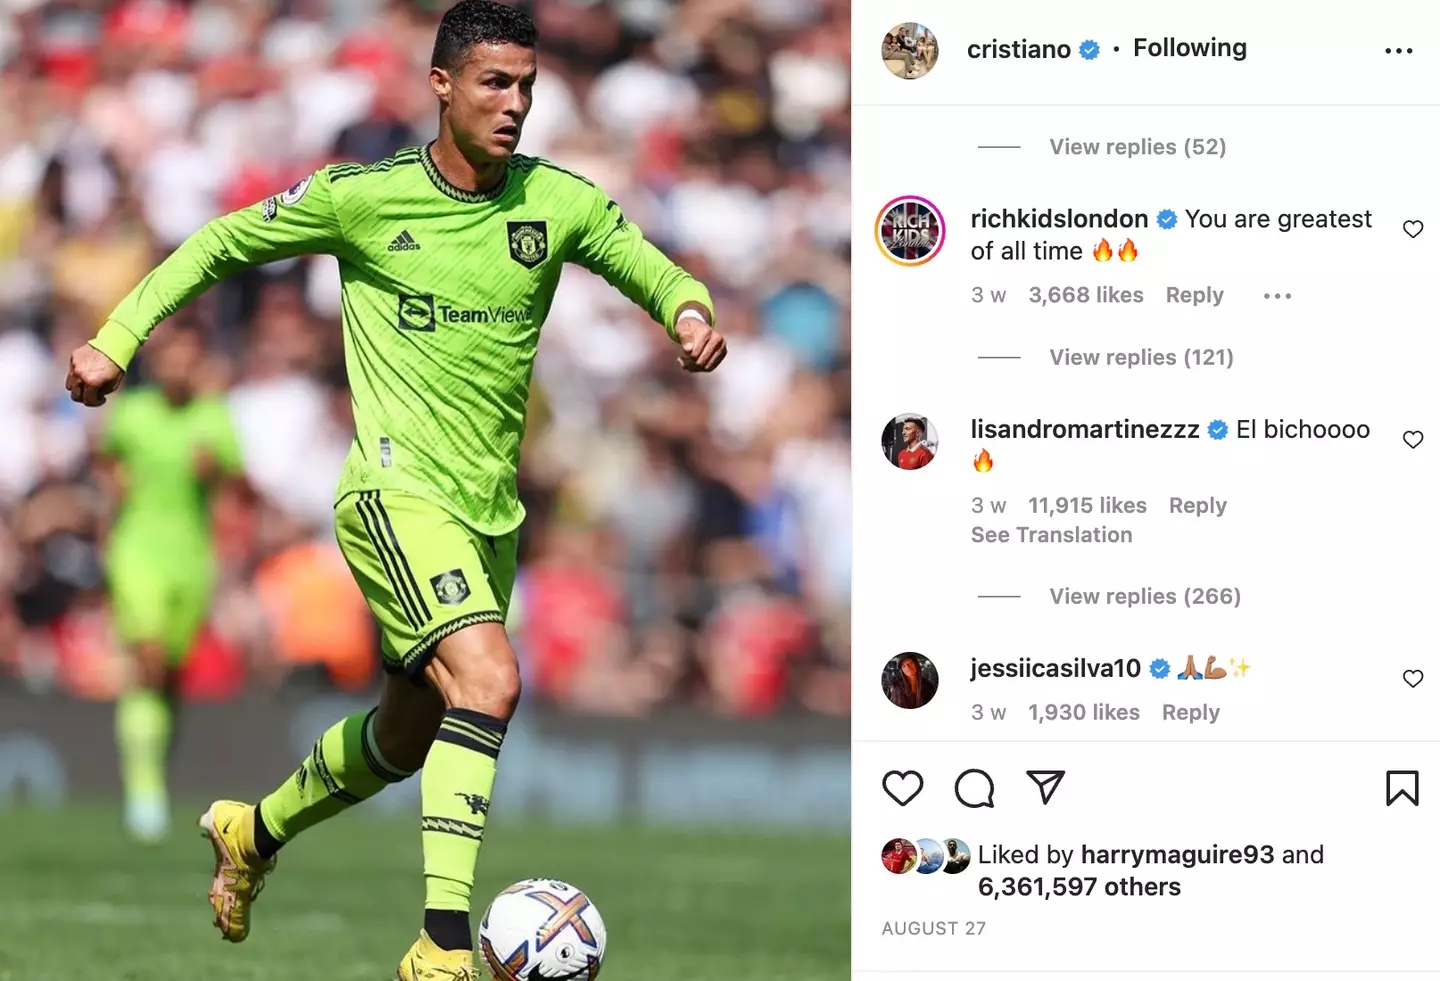 Martinez commented 'El Bicho' on one of Ronaldo's recent Instagram posts (Image: Alamy)